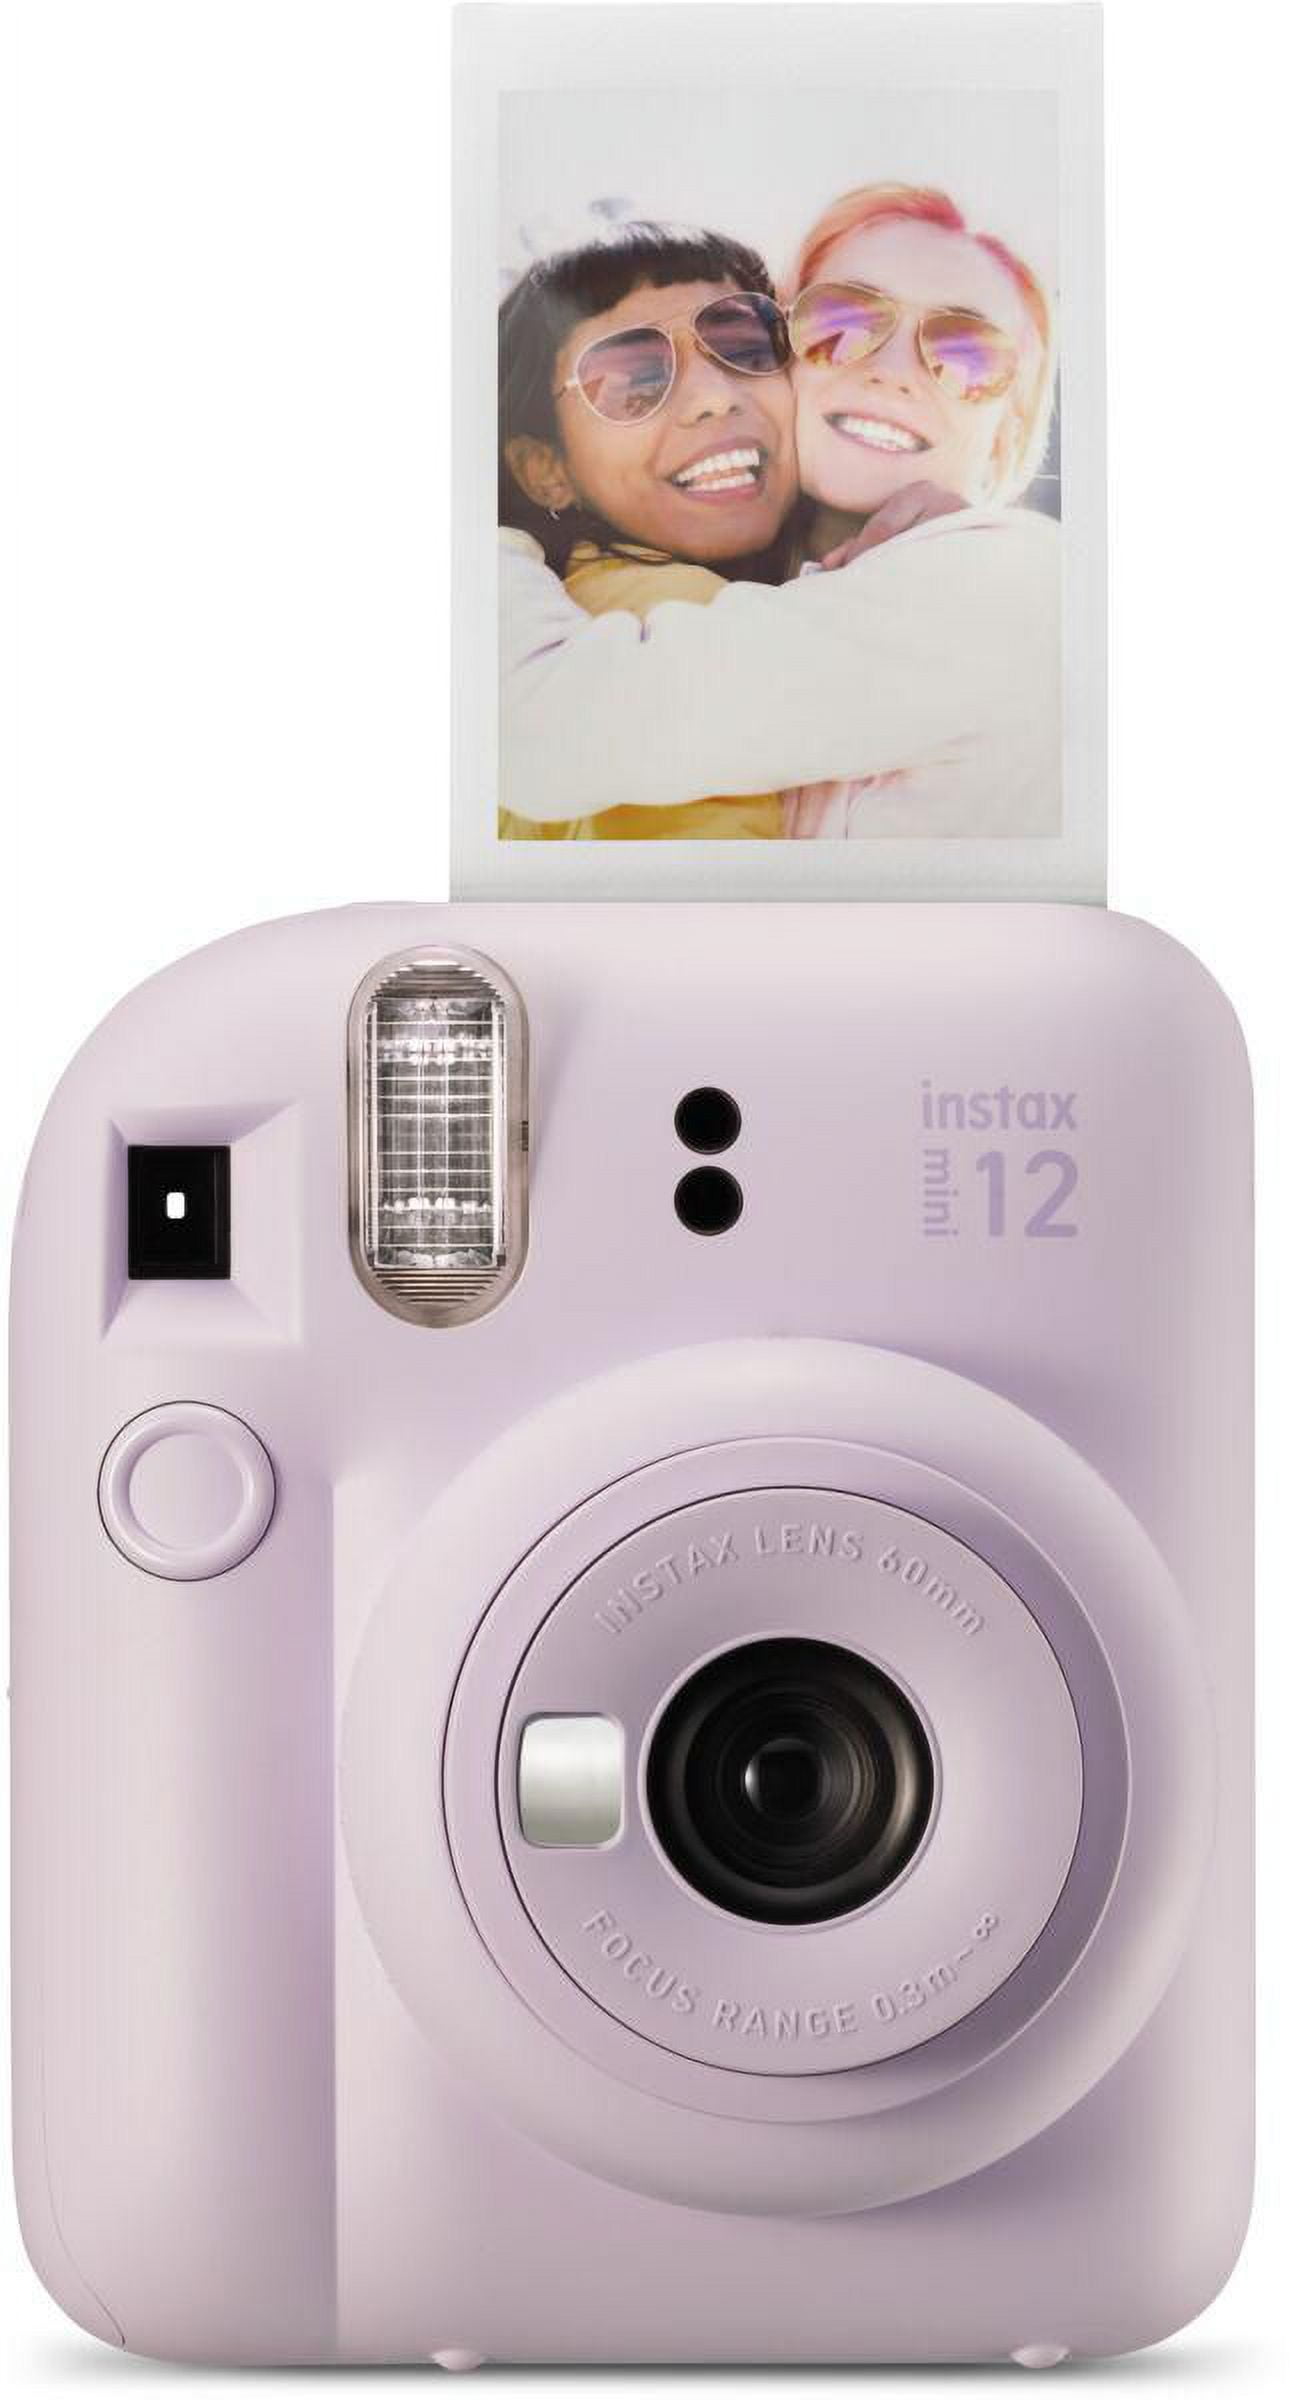  Fujifilm Instax Mini 12 Instant Camera Clay White + Minimate  Custom Case + Fuji Instax Film 20 Sheets Twin Pack : Electronics